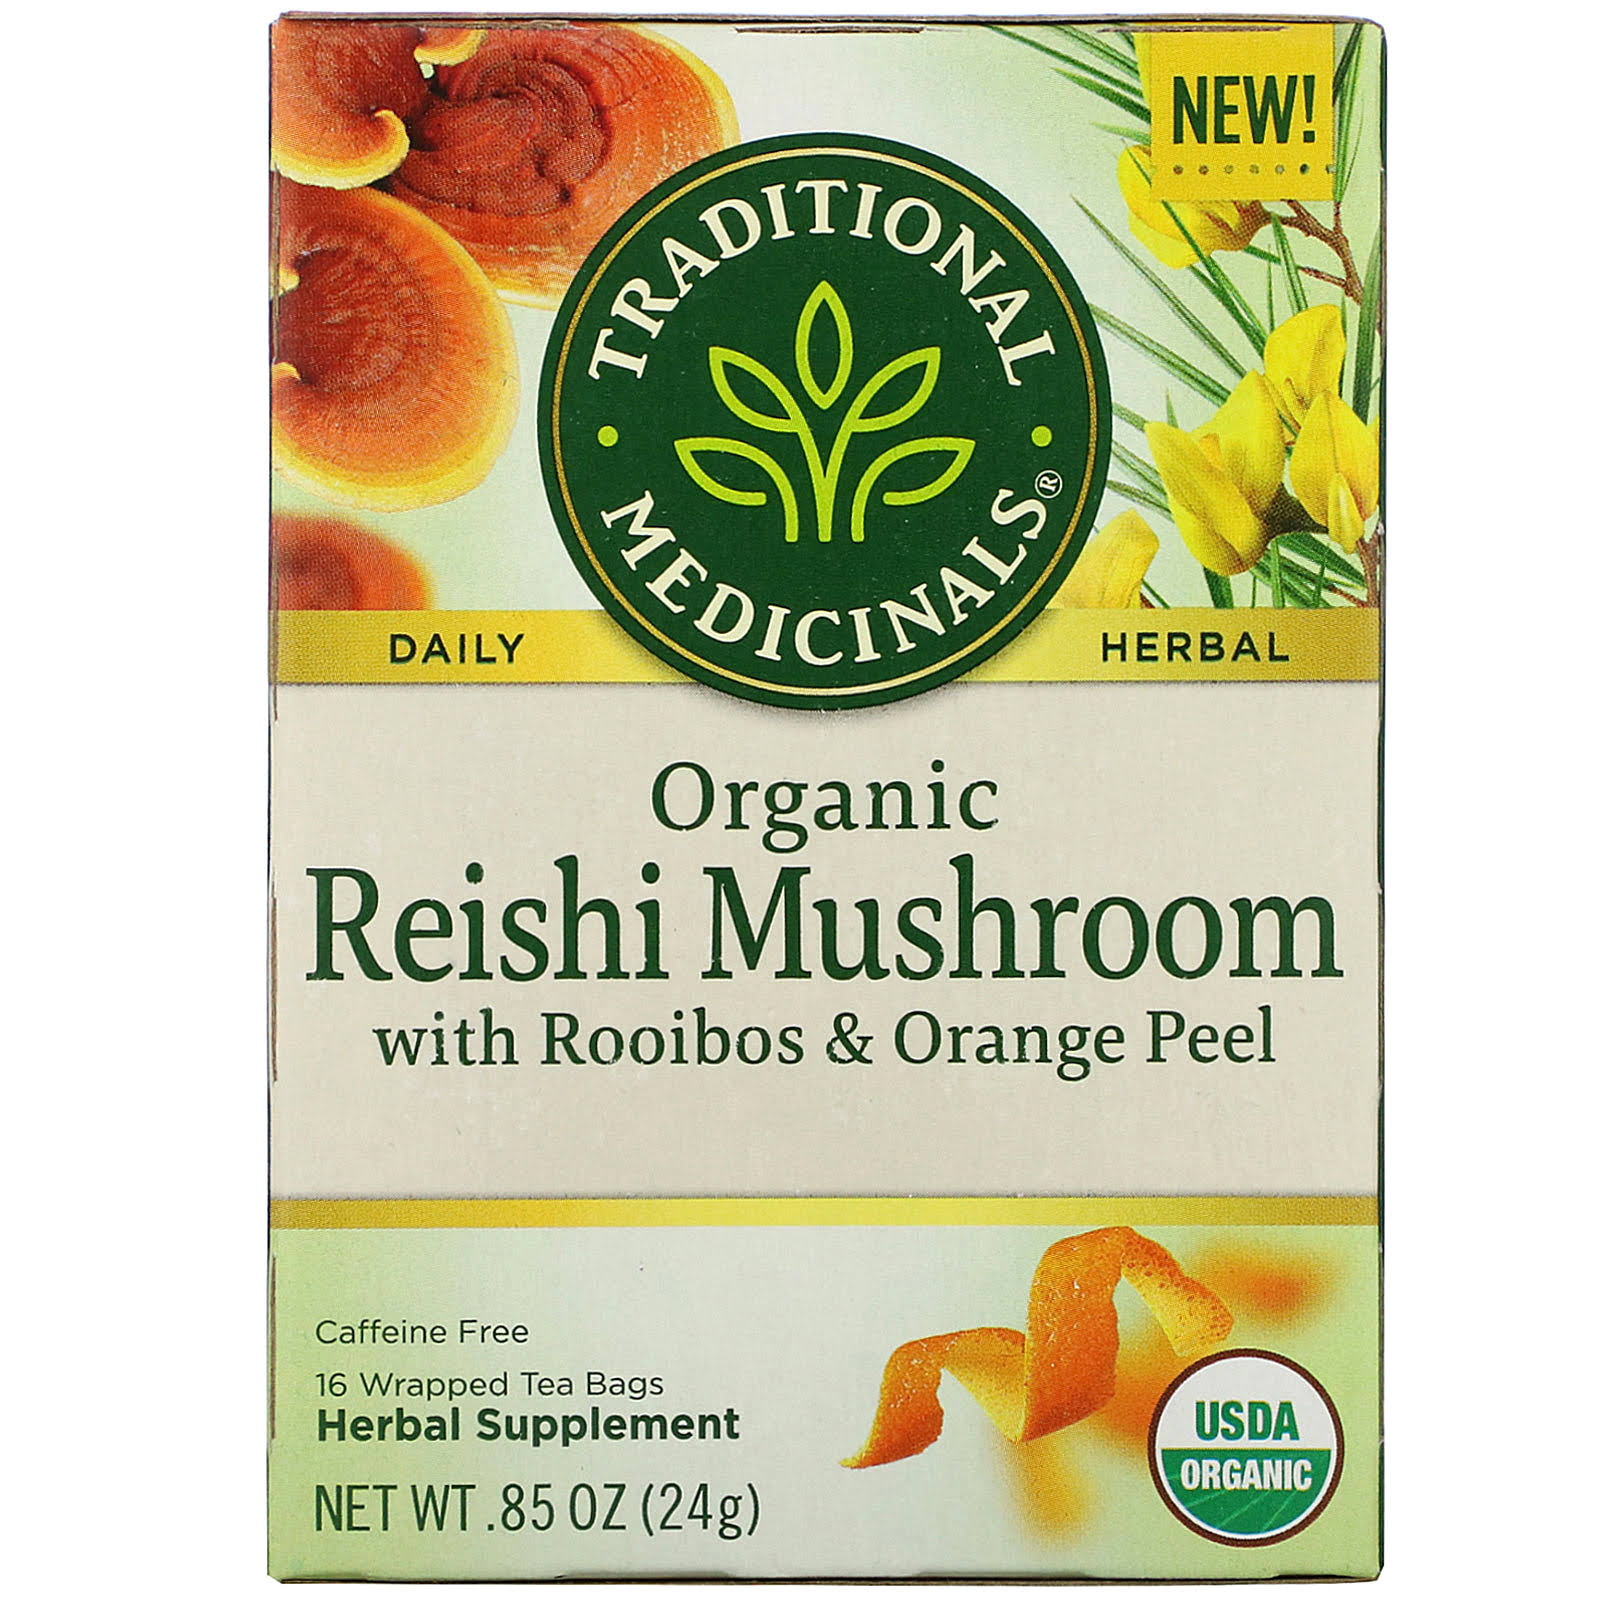 Traditional Medicinals Organic Reishi Mushroom with Rooibos & Orange Peel Tea of